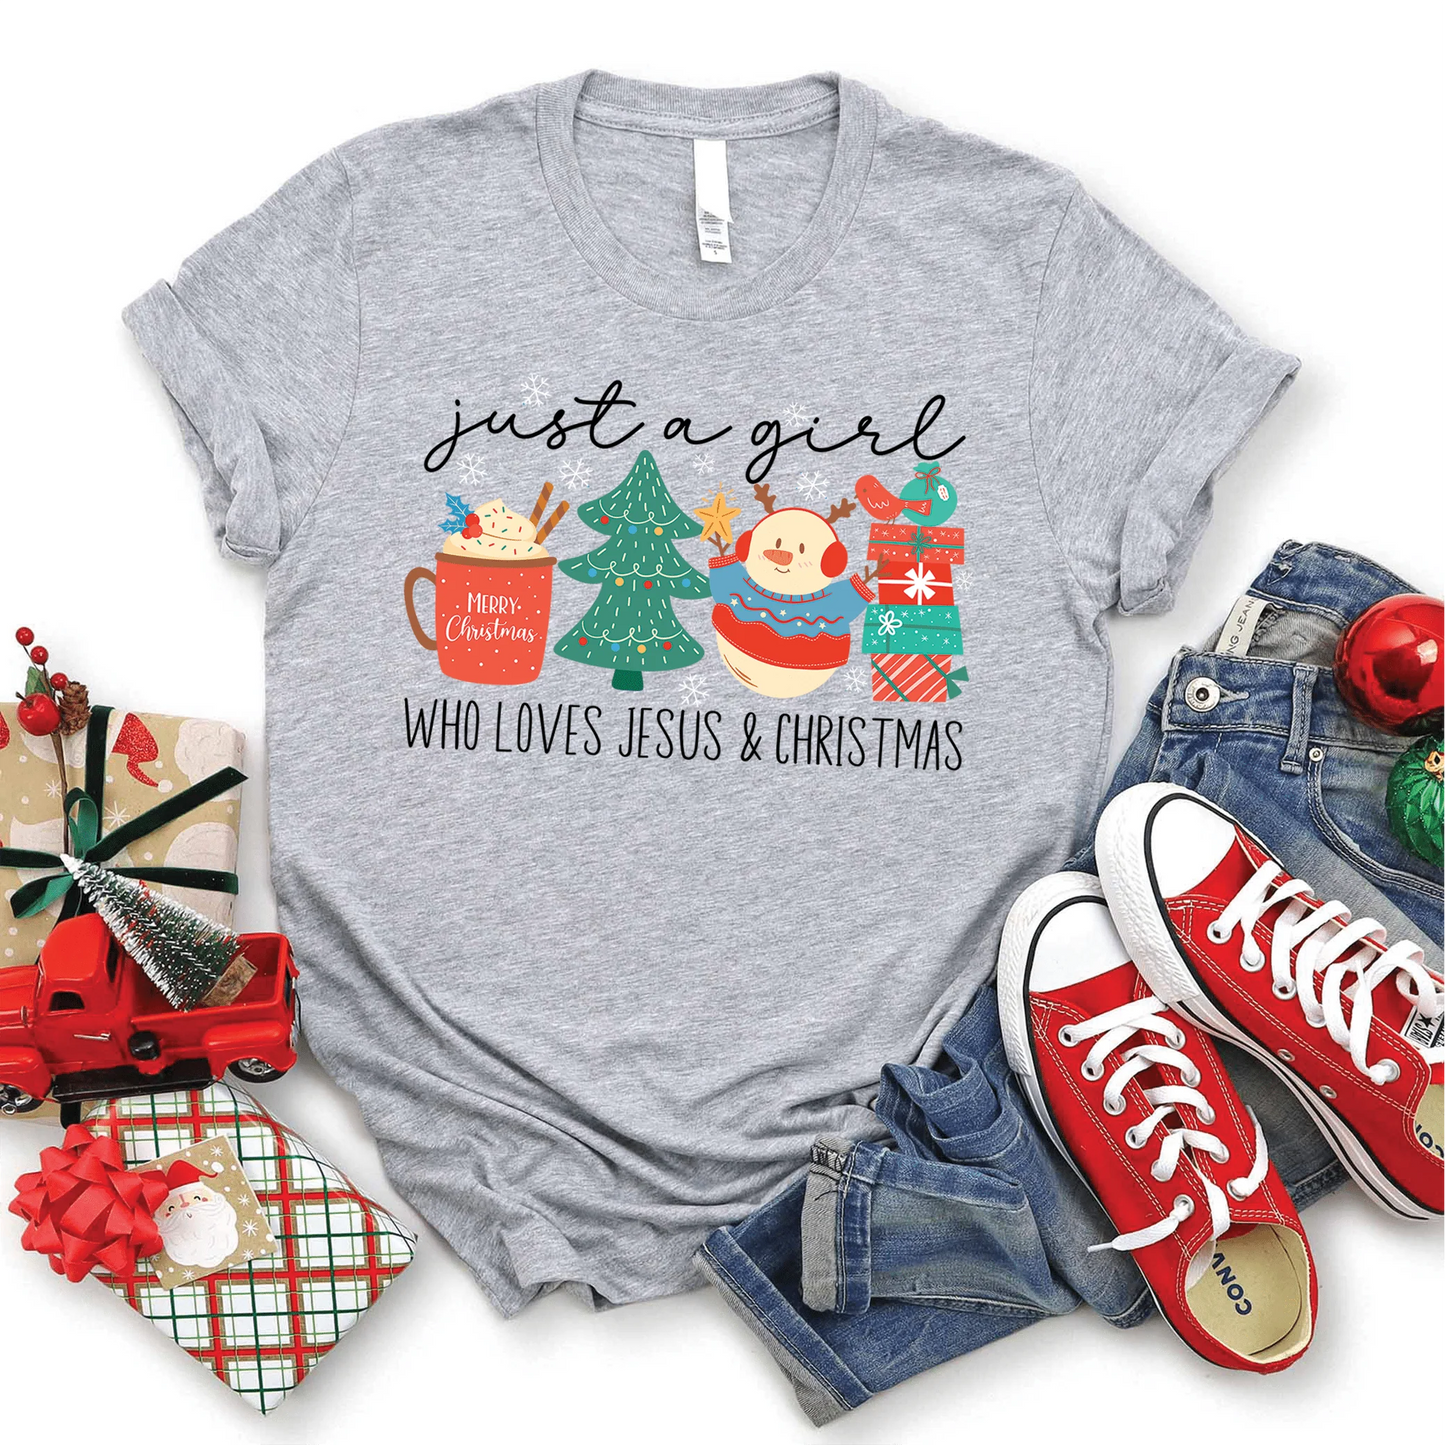 Jesus & Christmas Tee Shirt